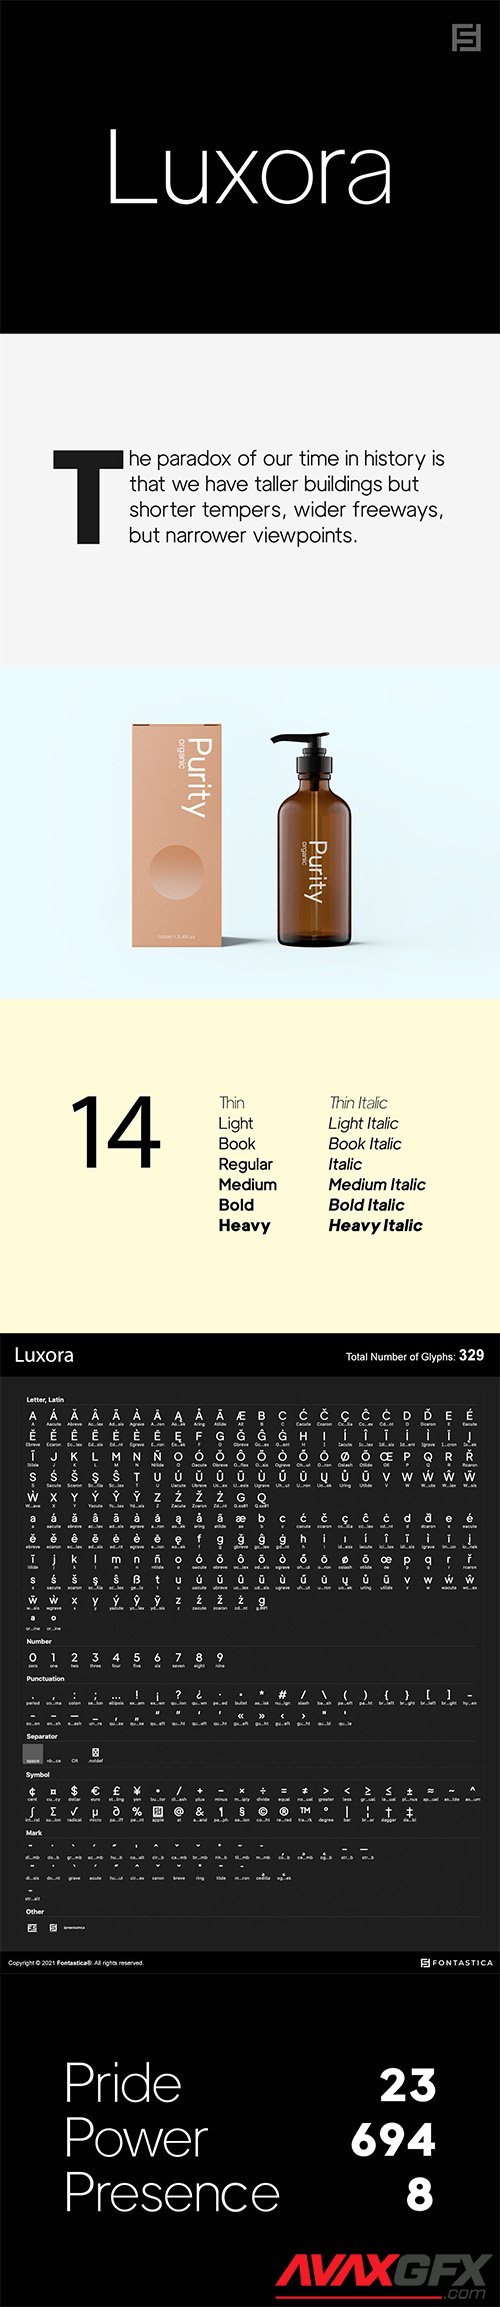 Luxora Grotesk - Clean & Minimalist Typeface 5825425